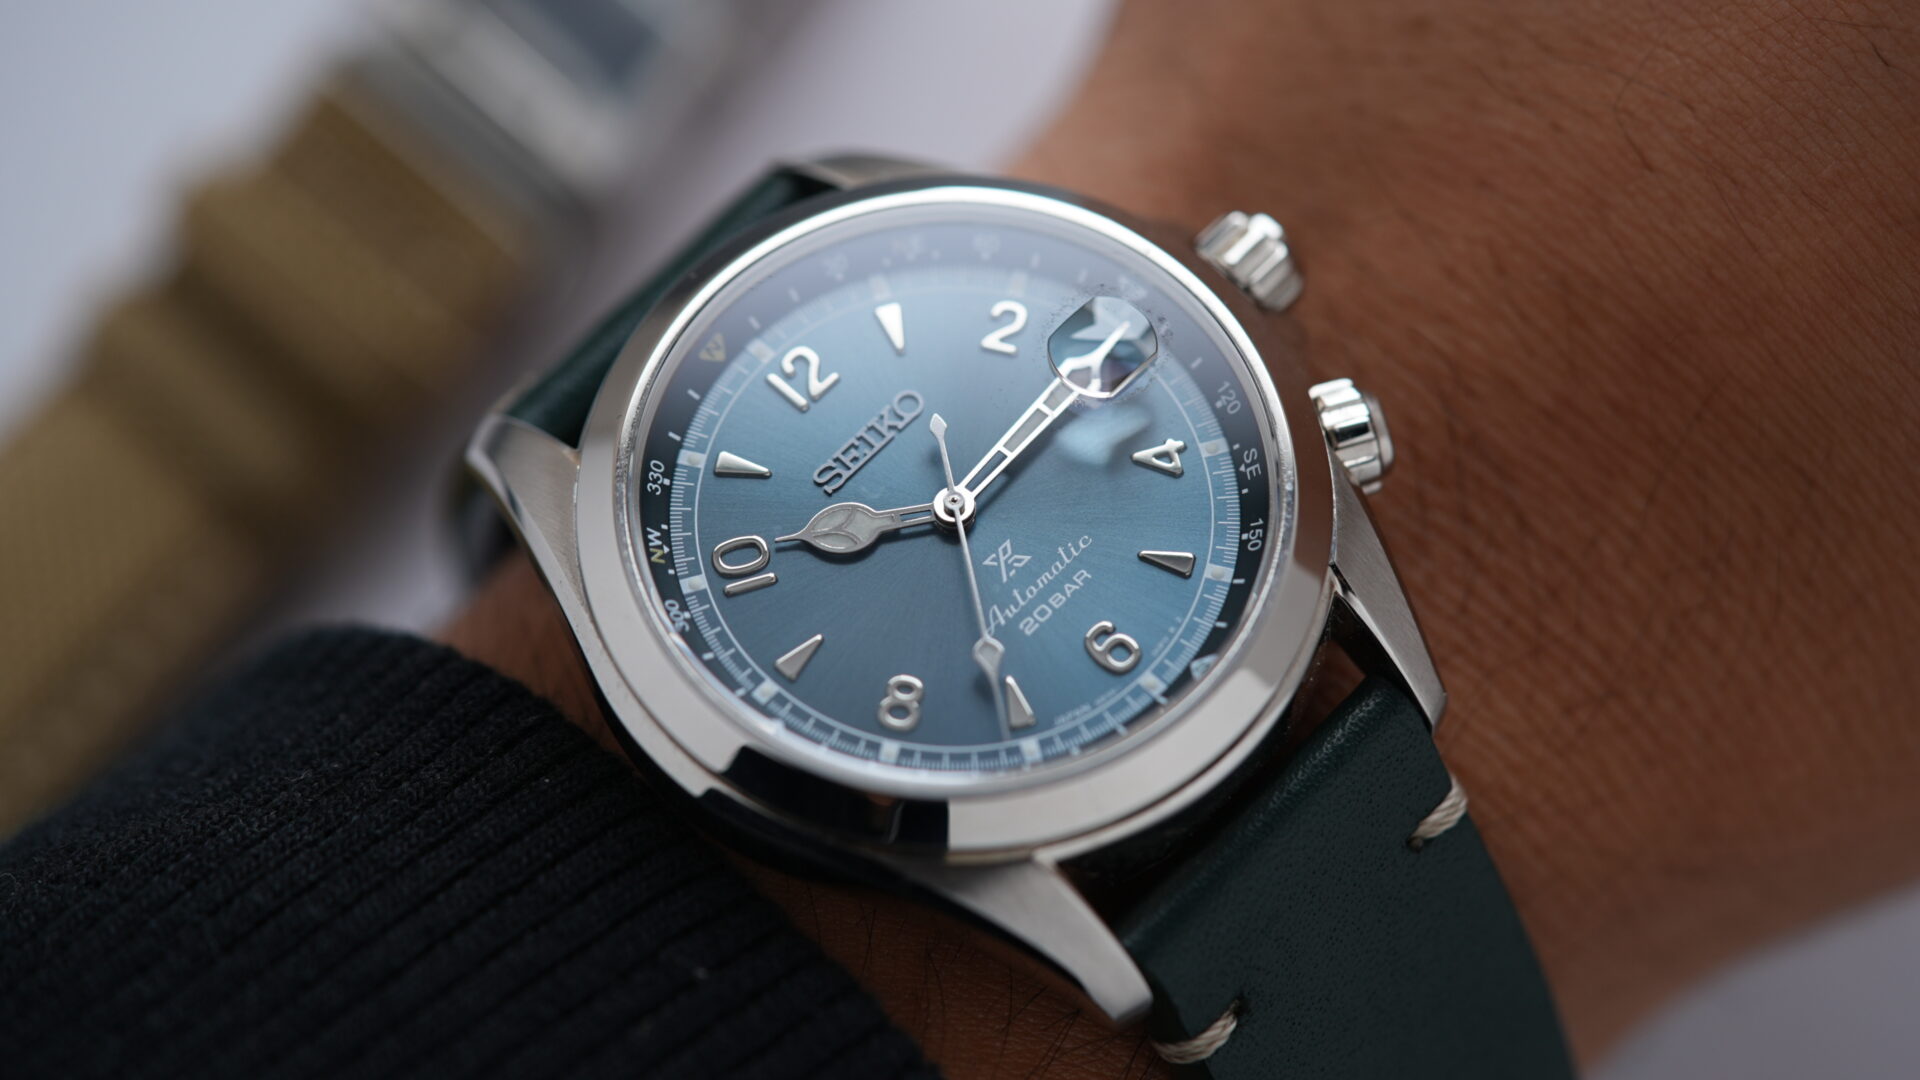 Seiko Alpinist Limited Edition Alpinist Mountain Glacier SPB199J1 watch being displayed on the wrist.